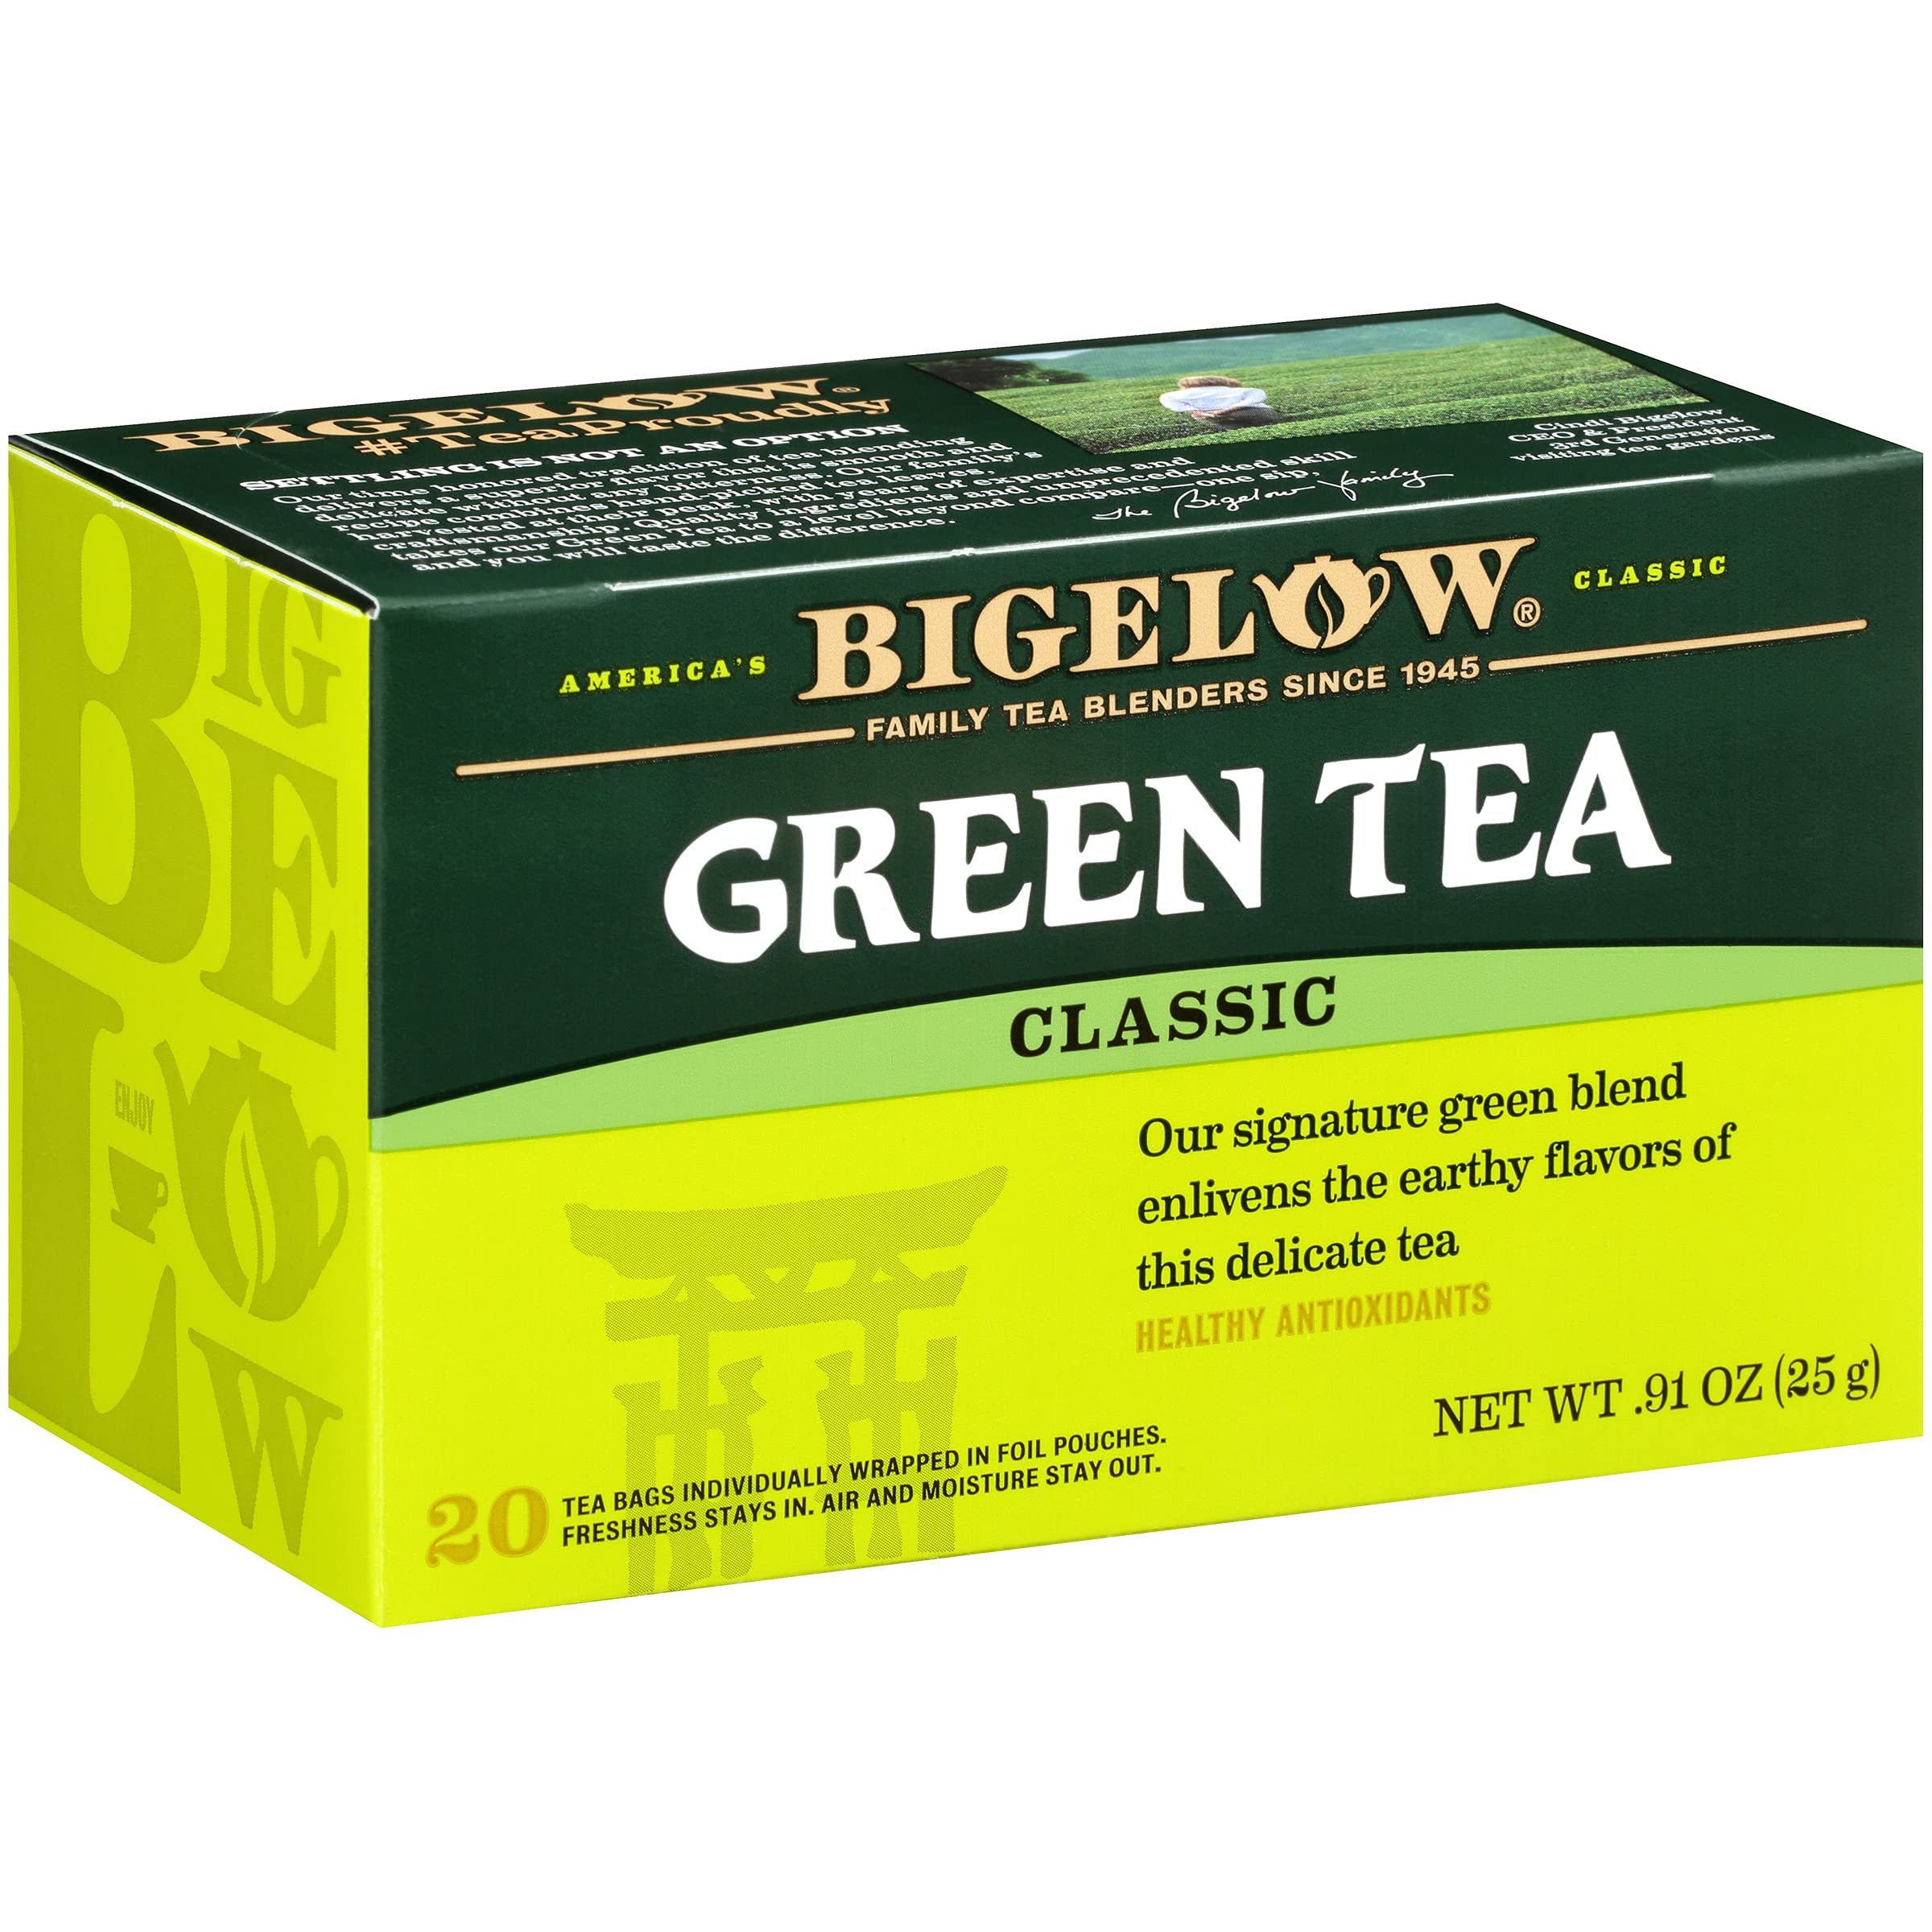 Bigelow Green Tea Bags, 20 Count Box (Pack of 6) Caffeinated Green Tea, 120 Tea Bags Total - $7.51 at Amazon